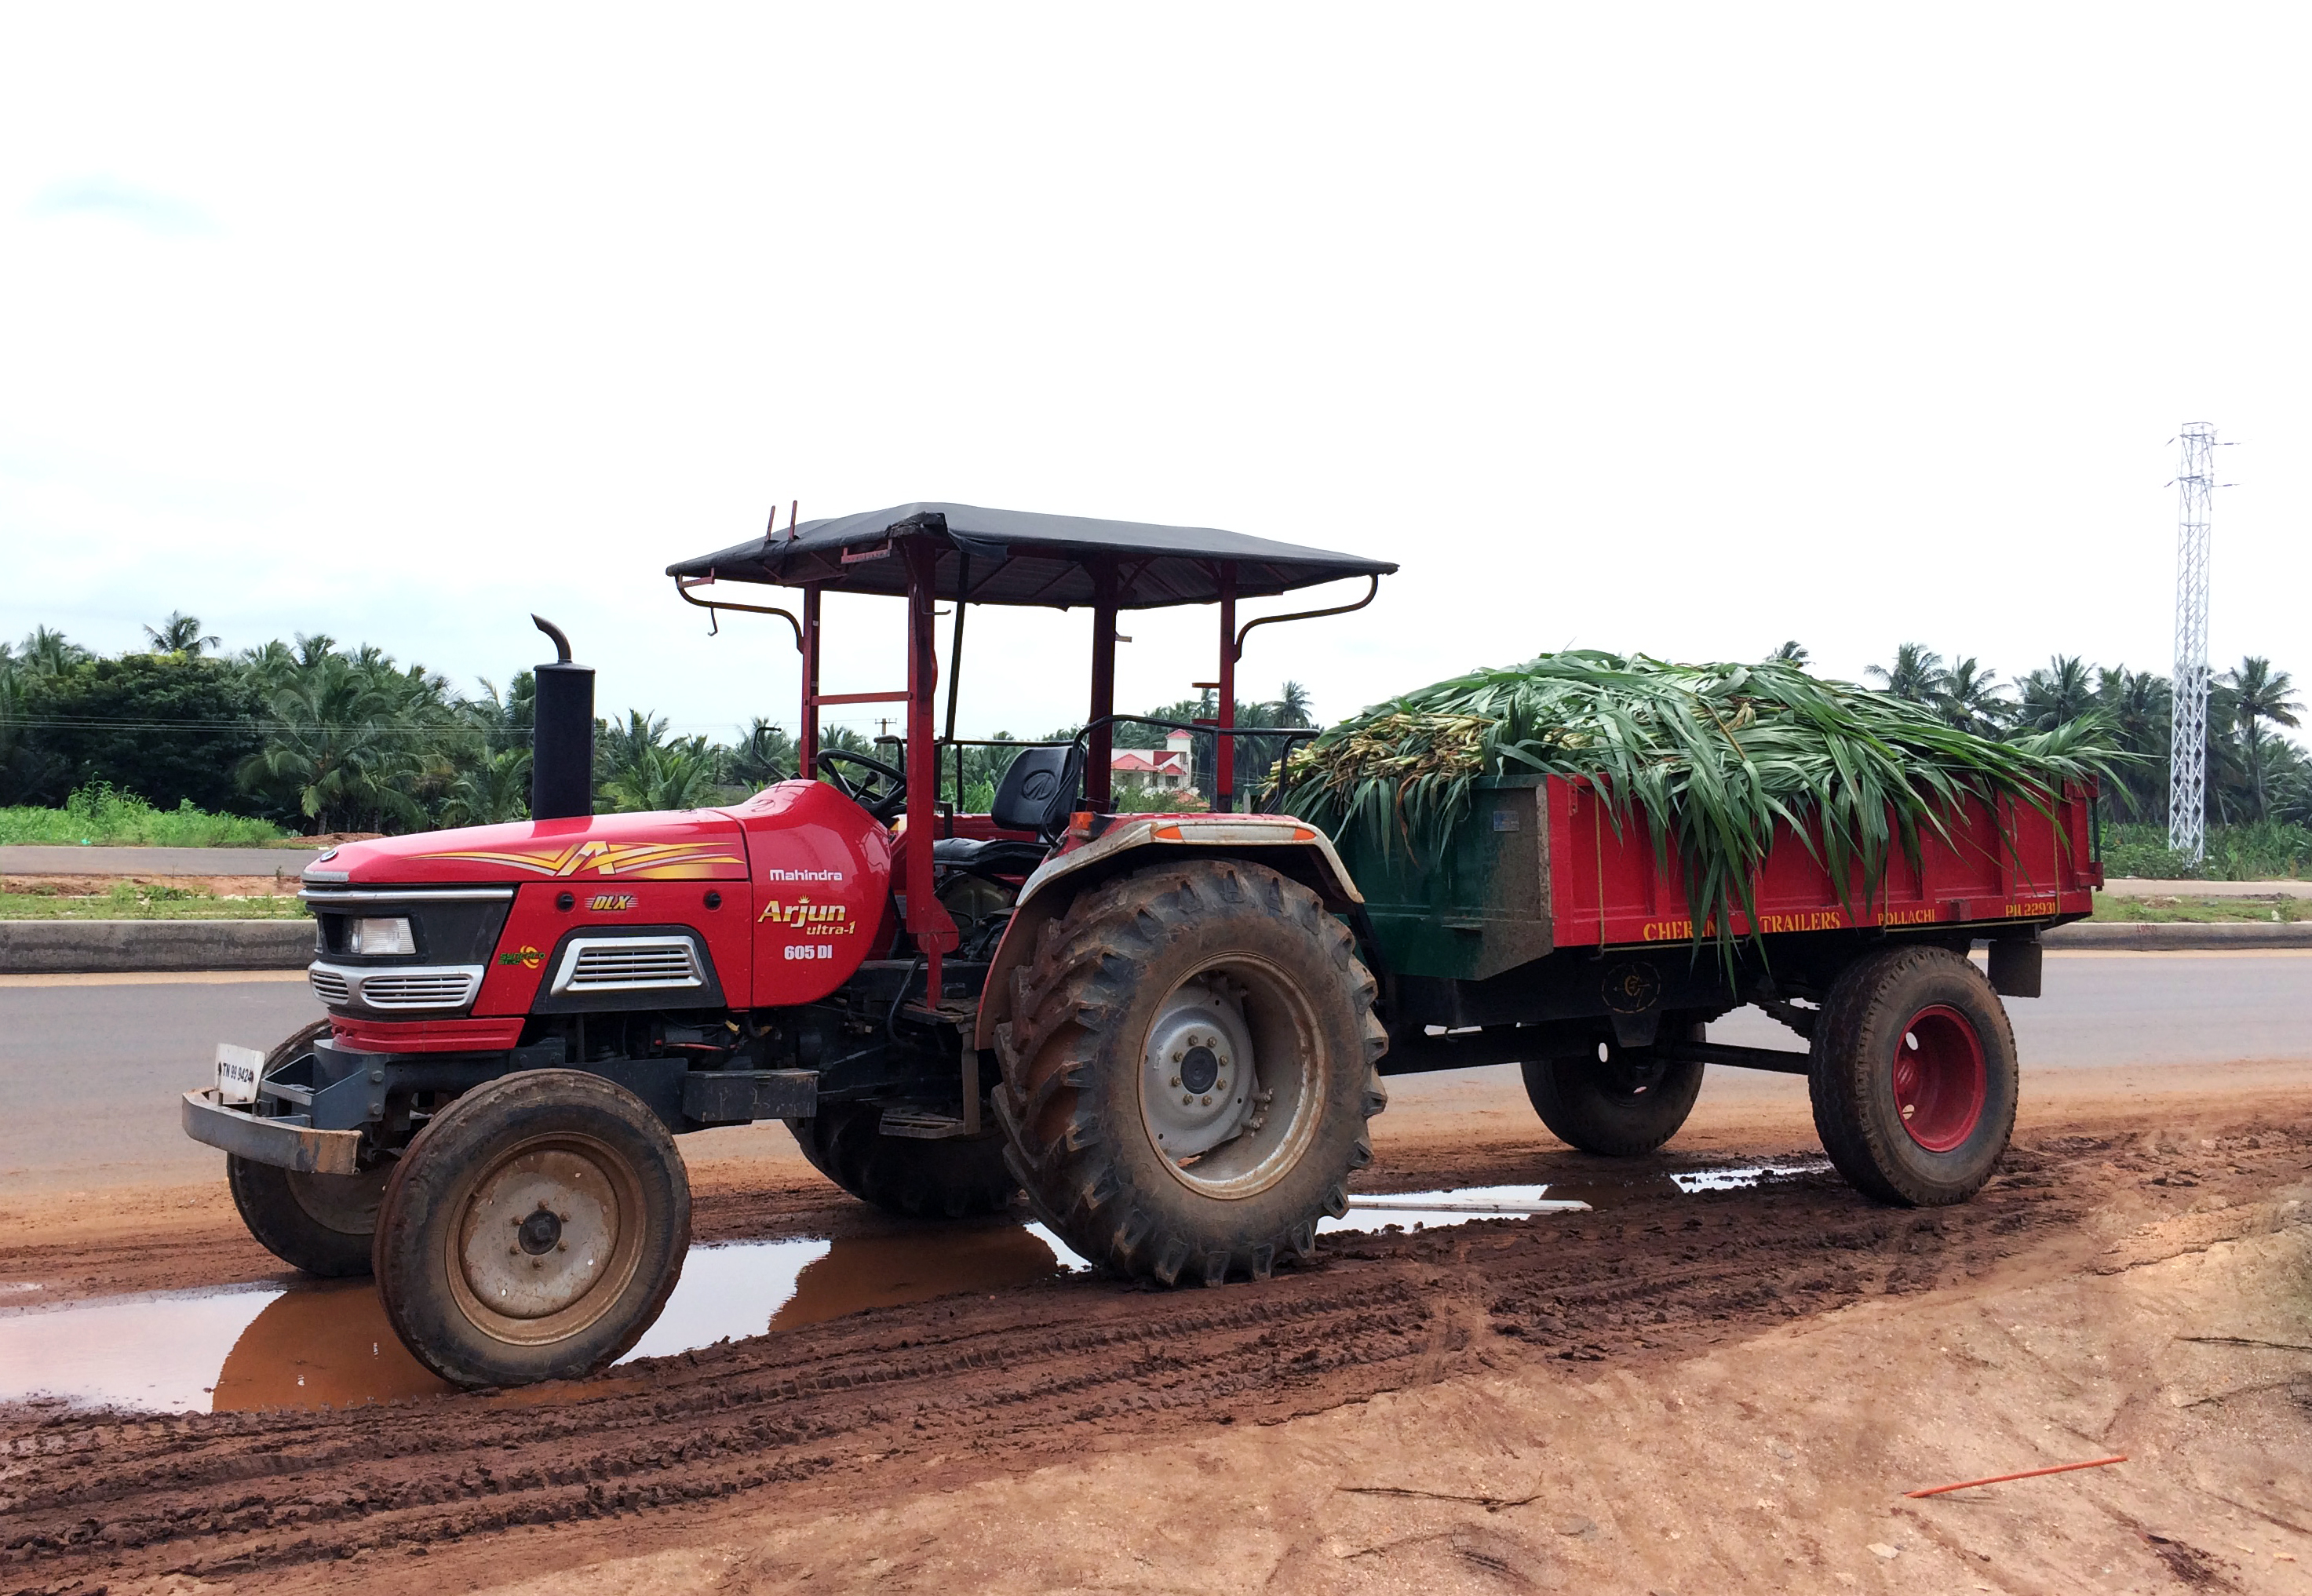 File:Mahindra Arjun 605 DI tractor with trailer.JPG - Wikimedia Commons